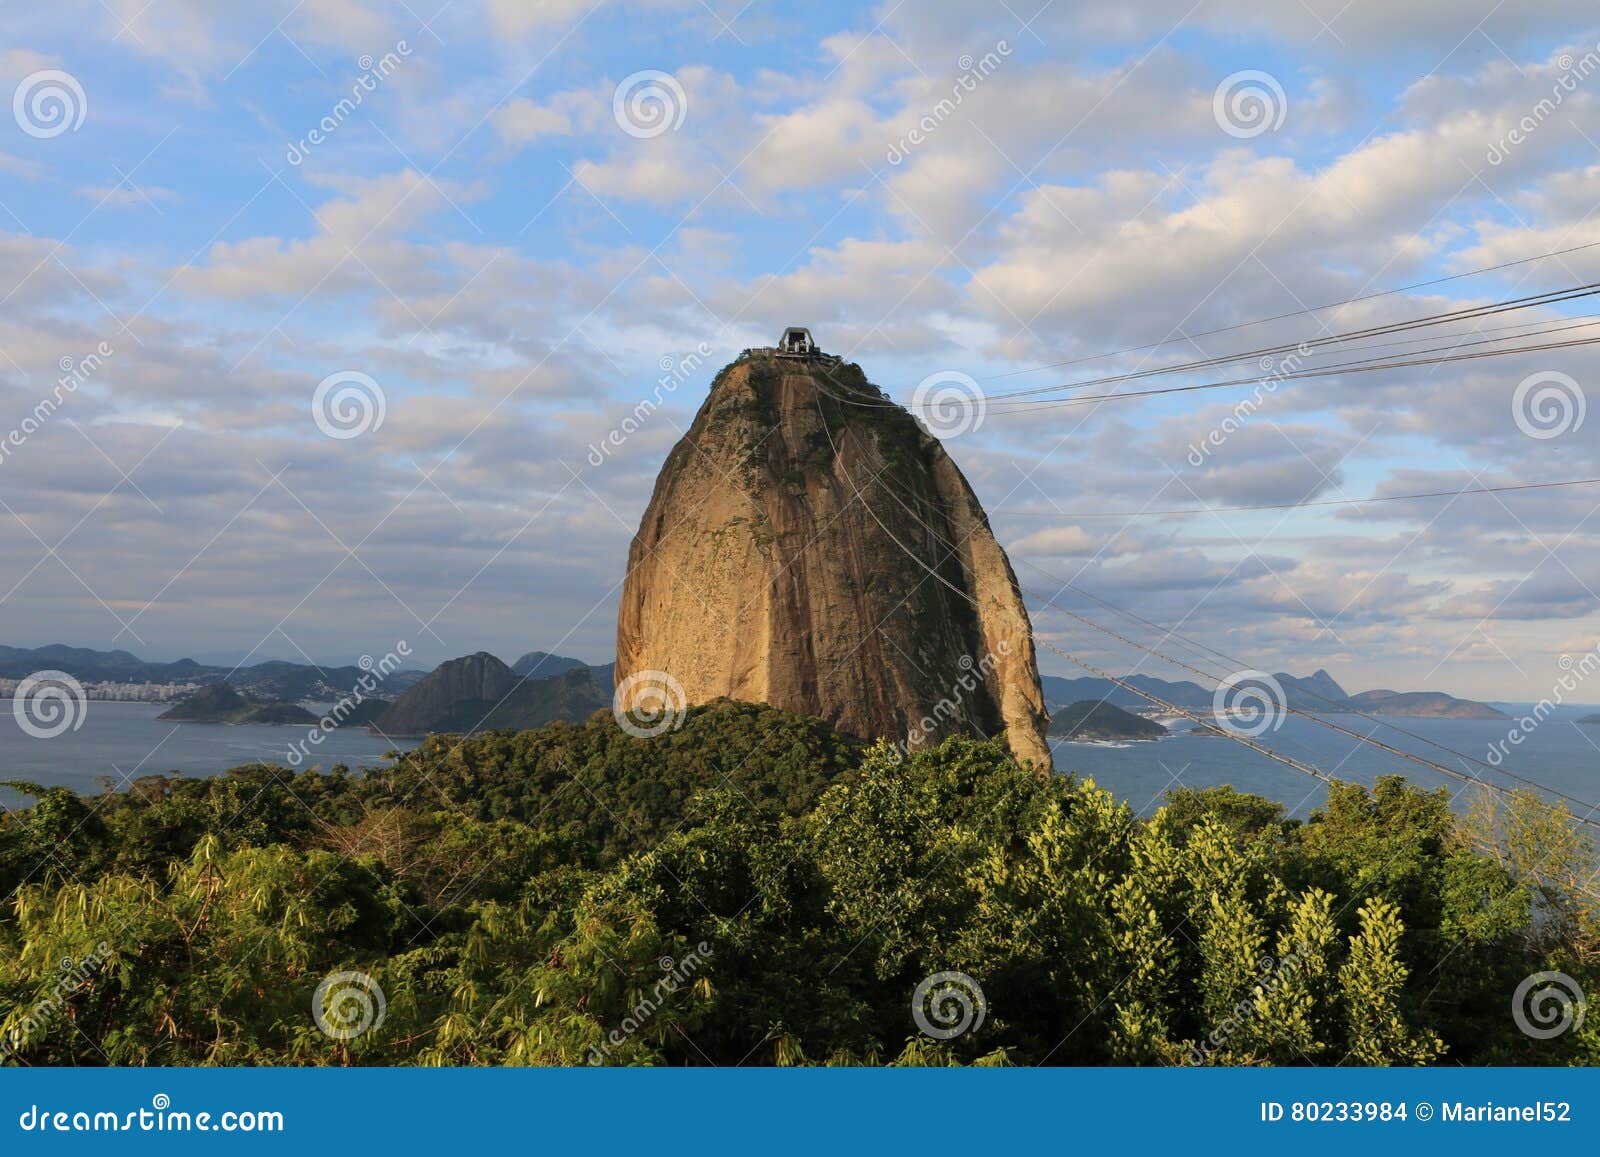 sugarloaf mountain, rio de janeiro, brazil